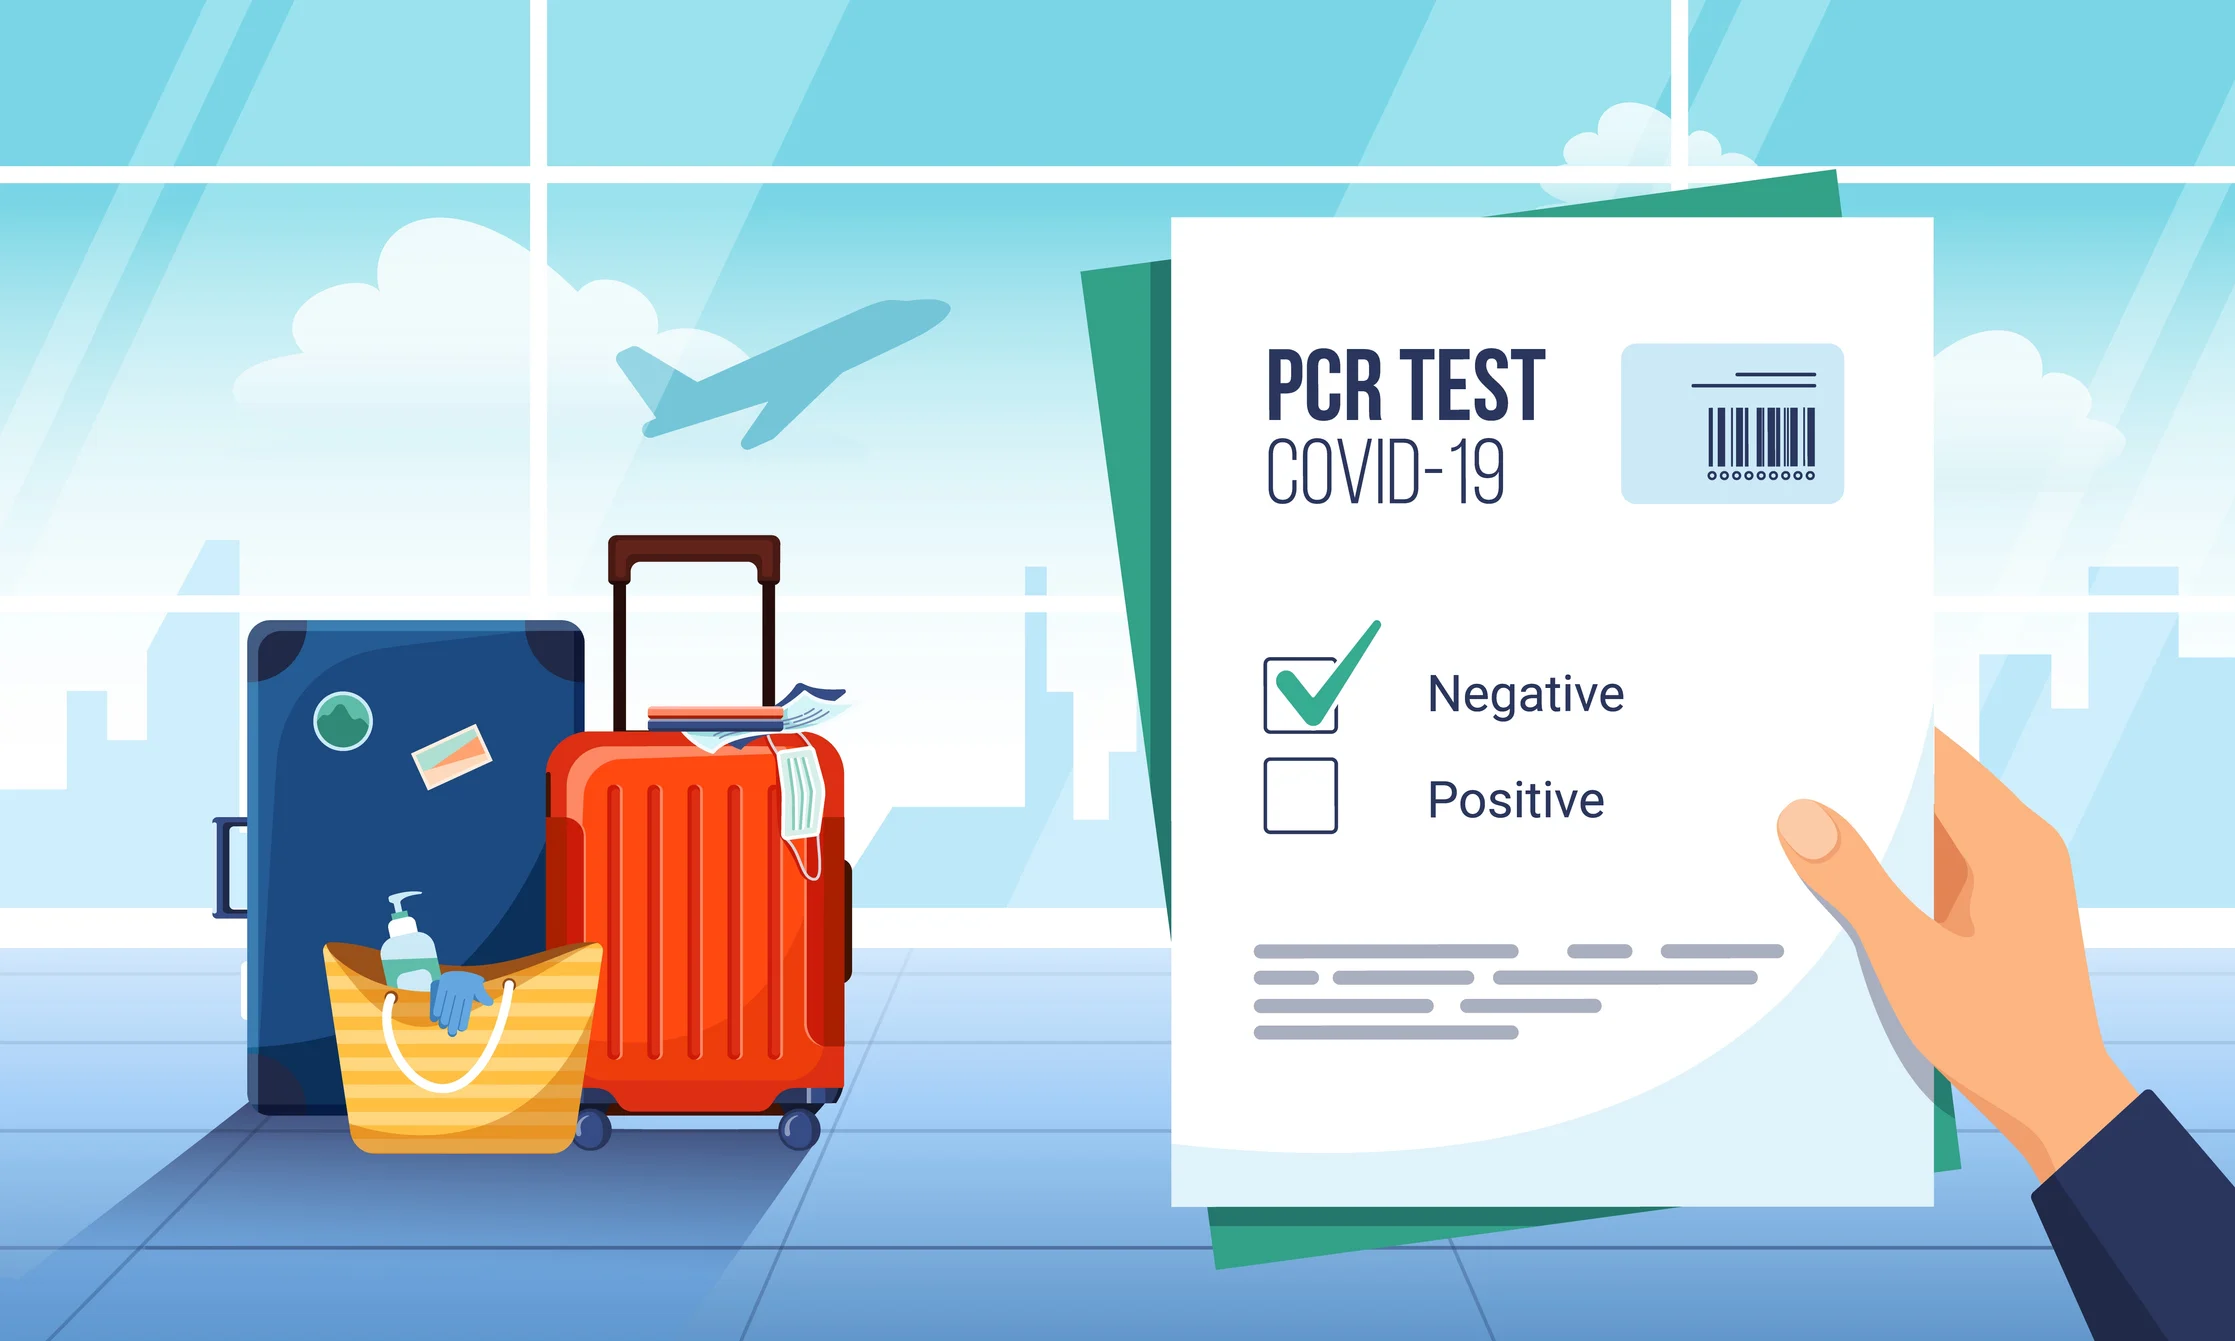 PCR test image